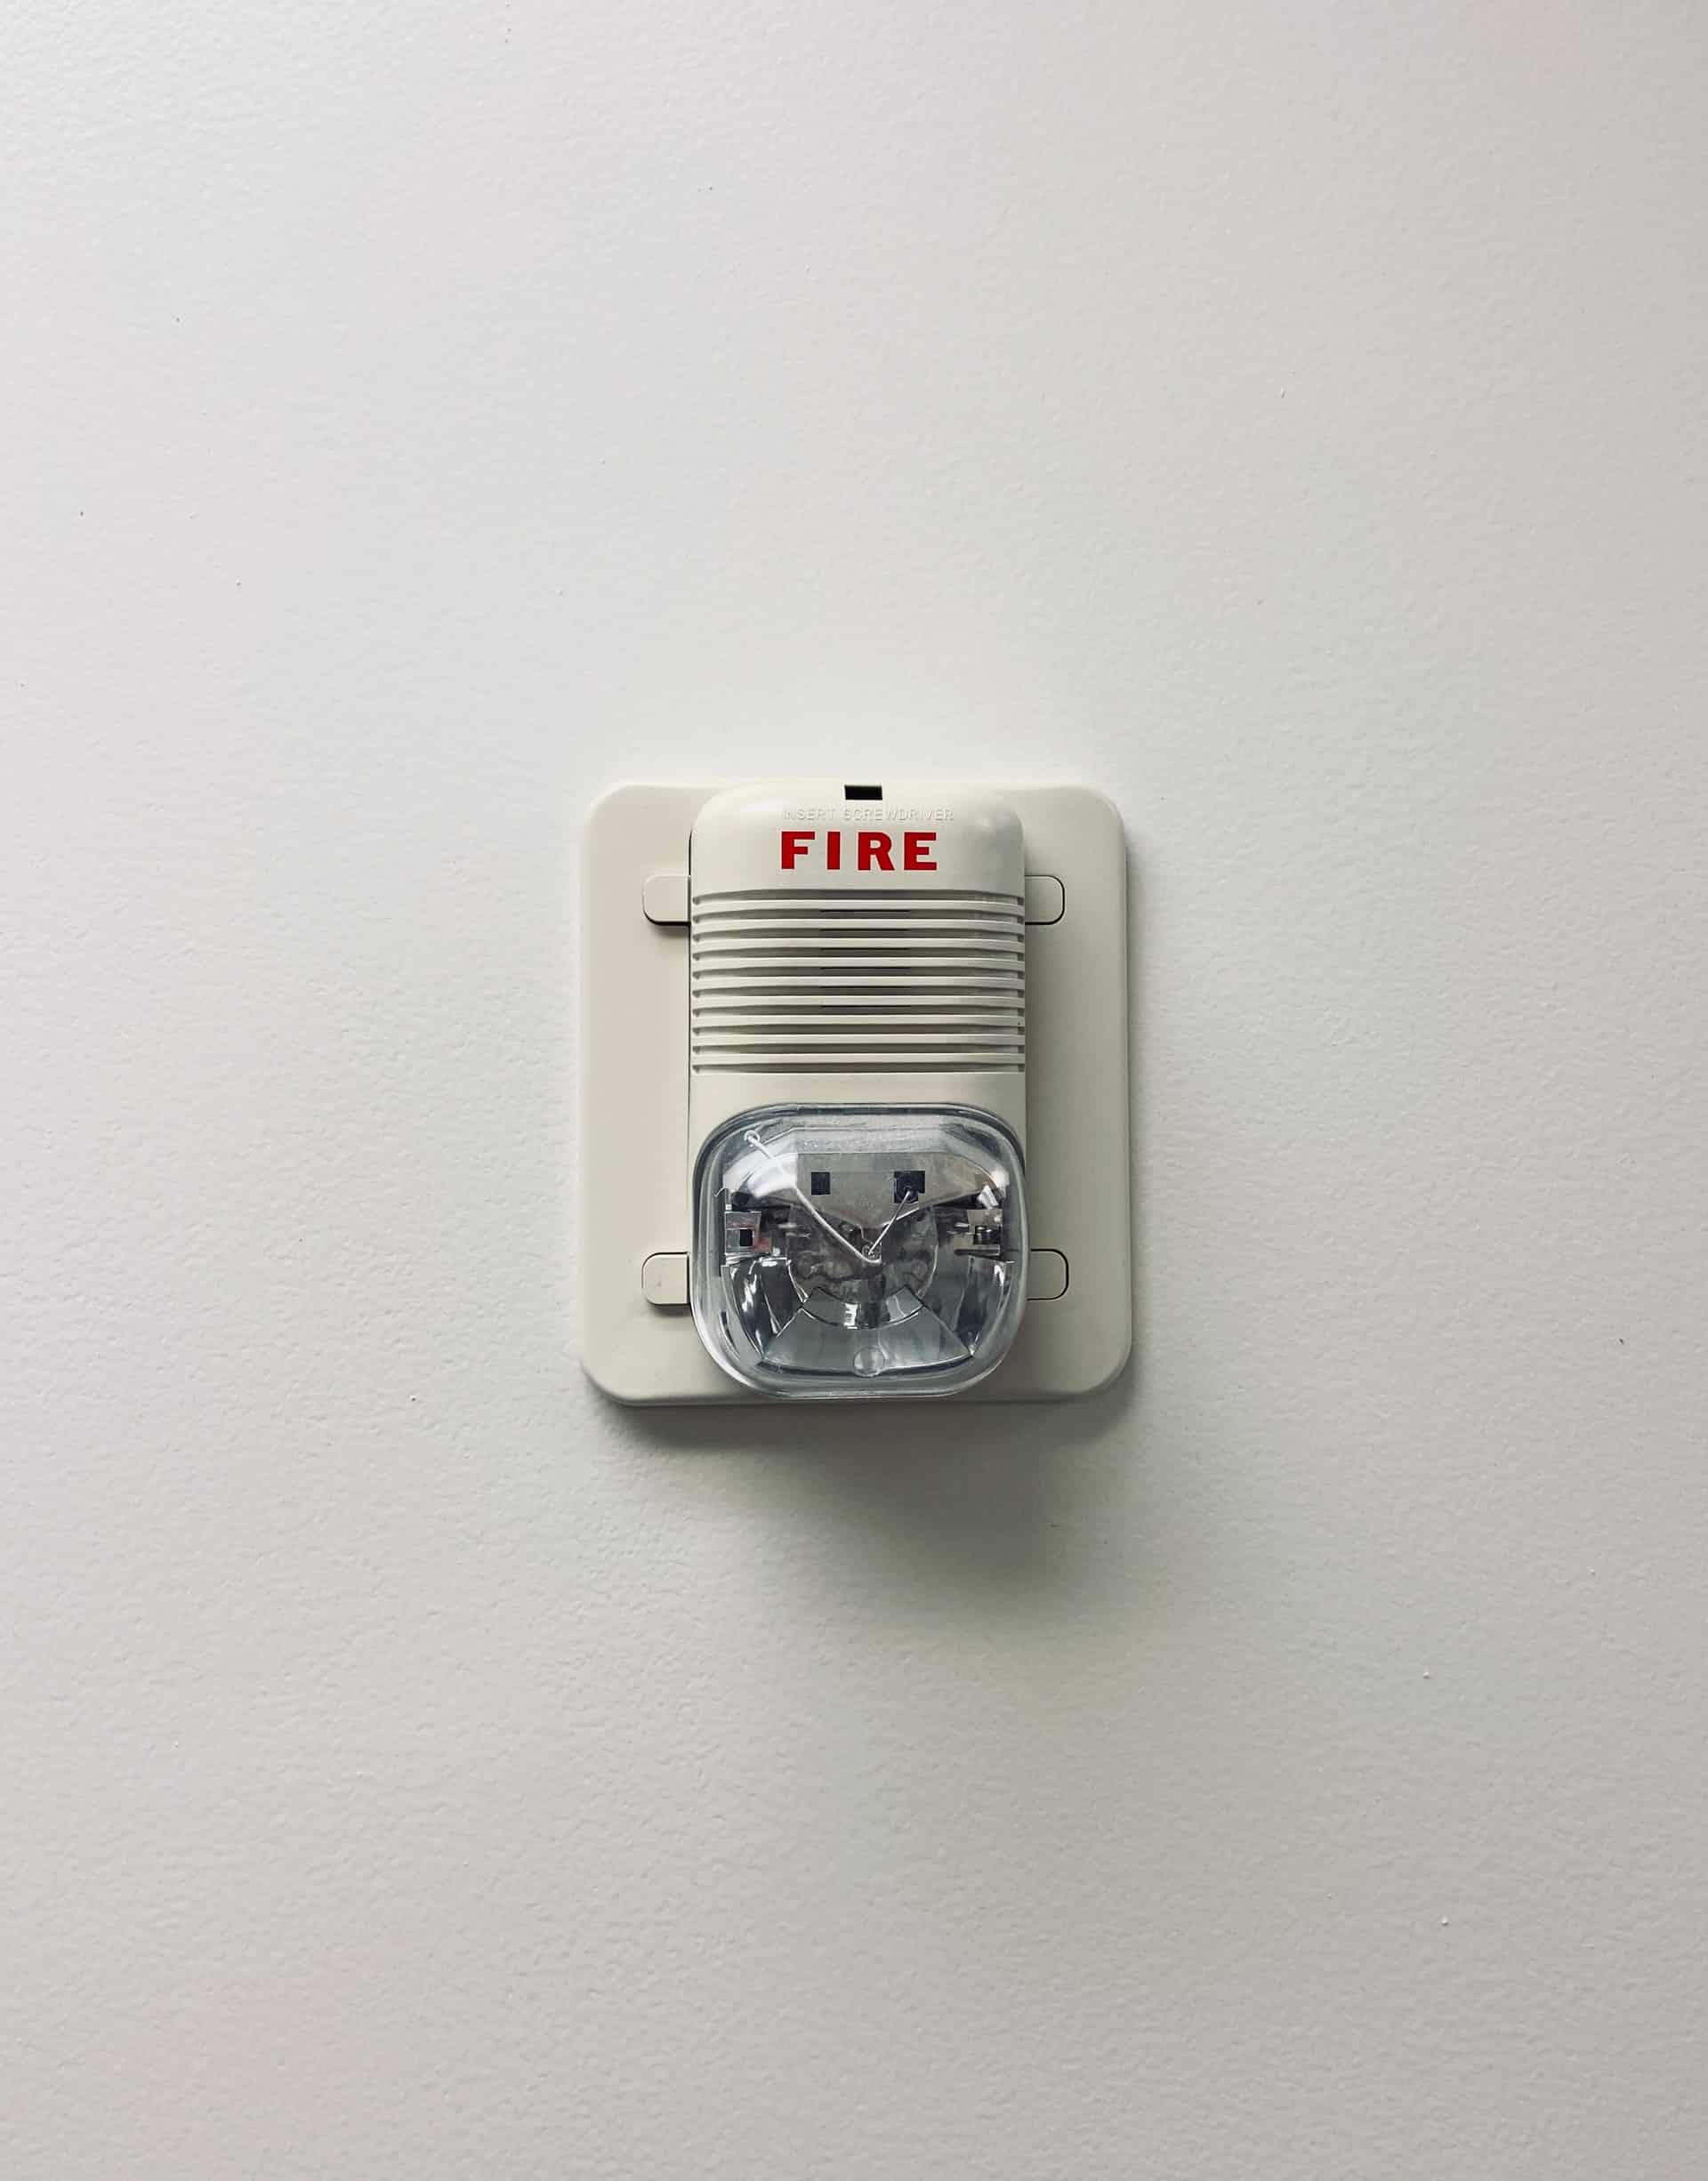 Fire Alarm Panels Benefits Article Image